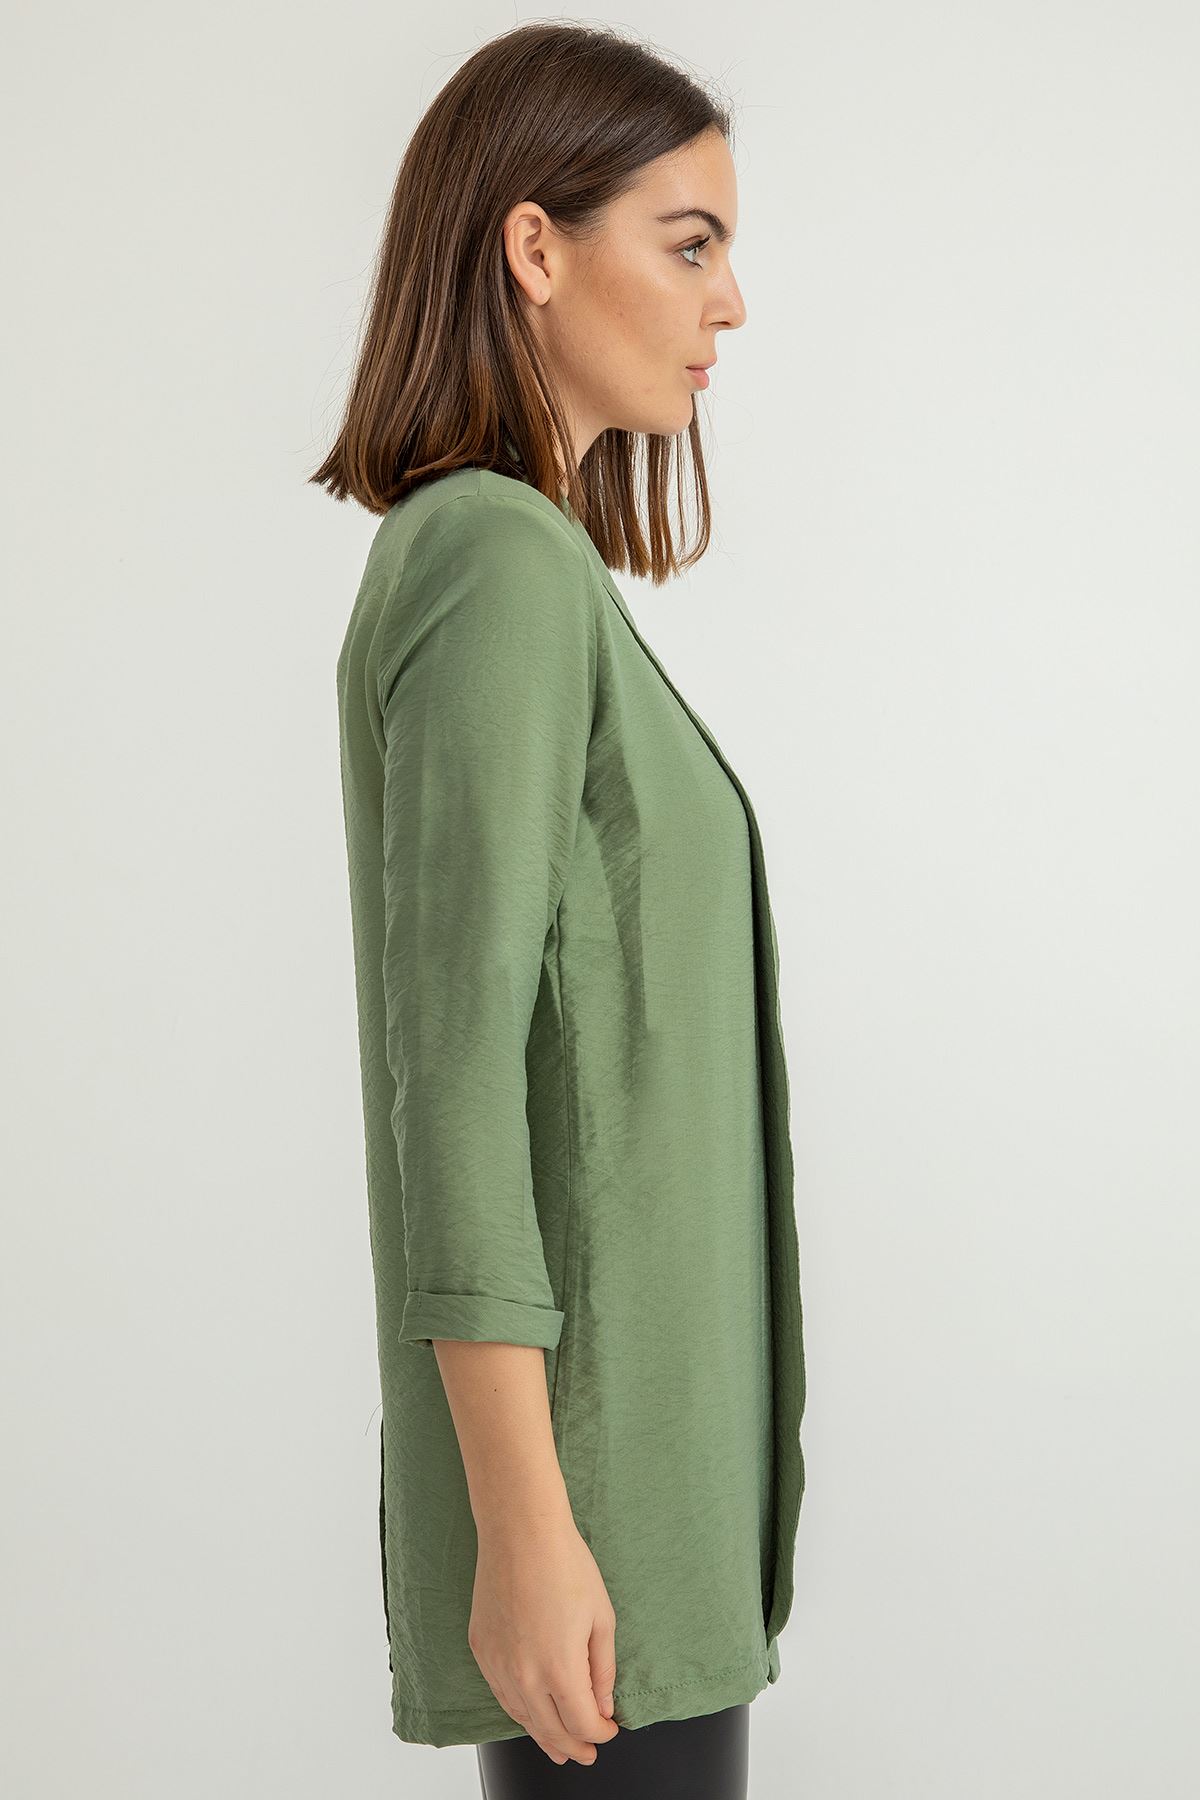 Aerobin Fabric Long Sleeve Shawl Collar Below Hip Comfy Women Jacket - Khaki 